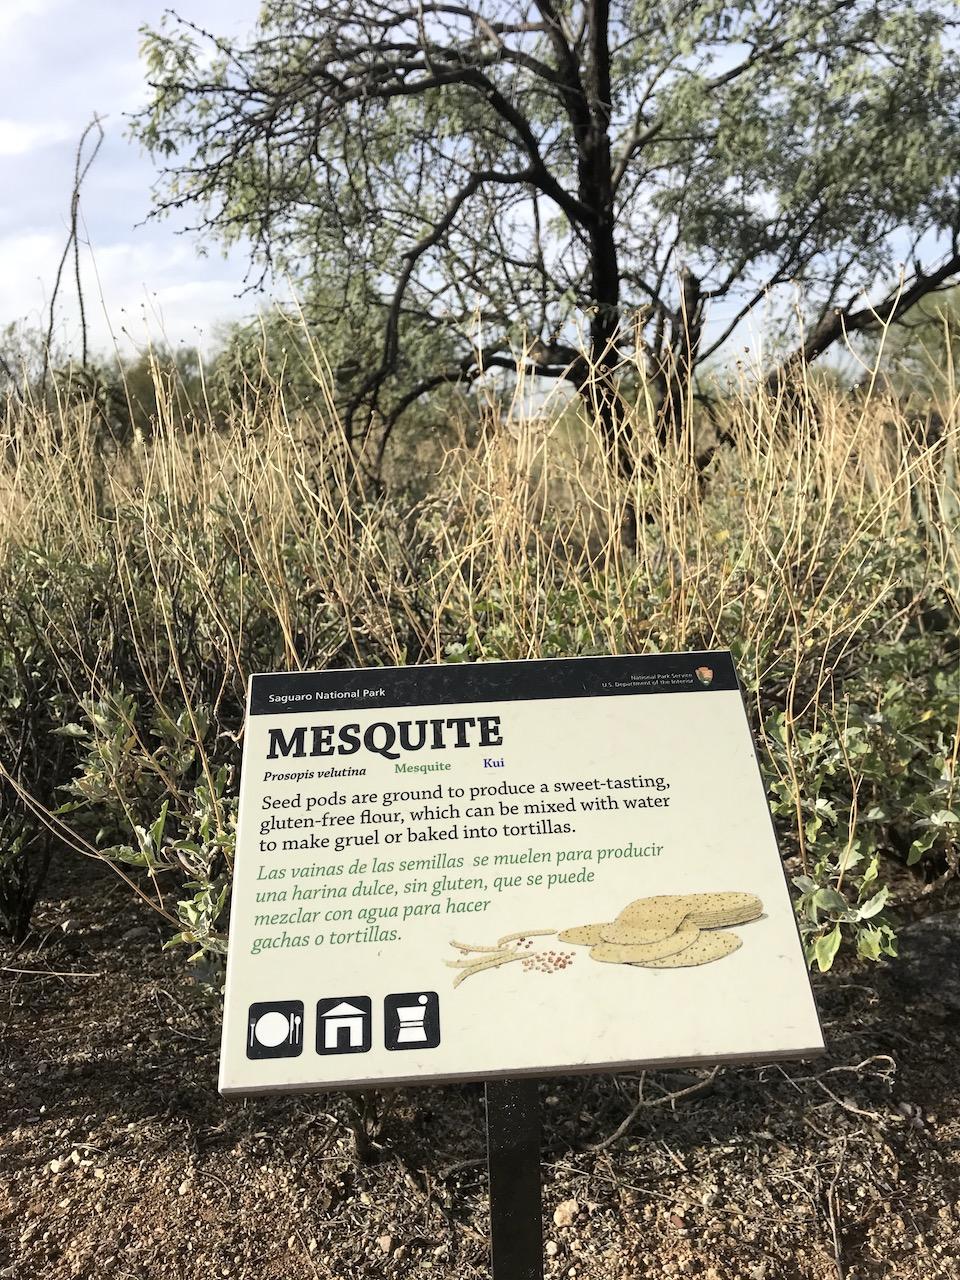 Mesquite tree, Ethobotany Garden, Saguaro National Park/Kurt Repanshek